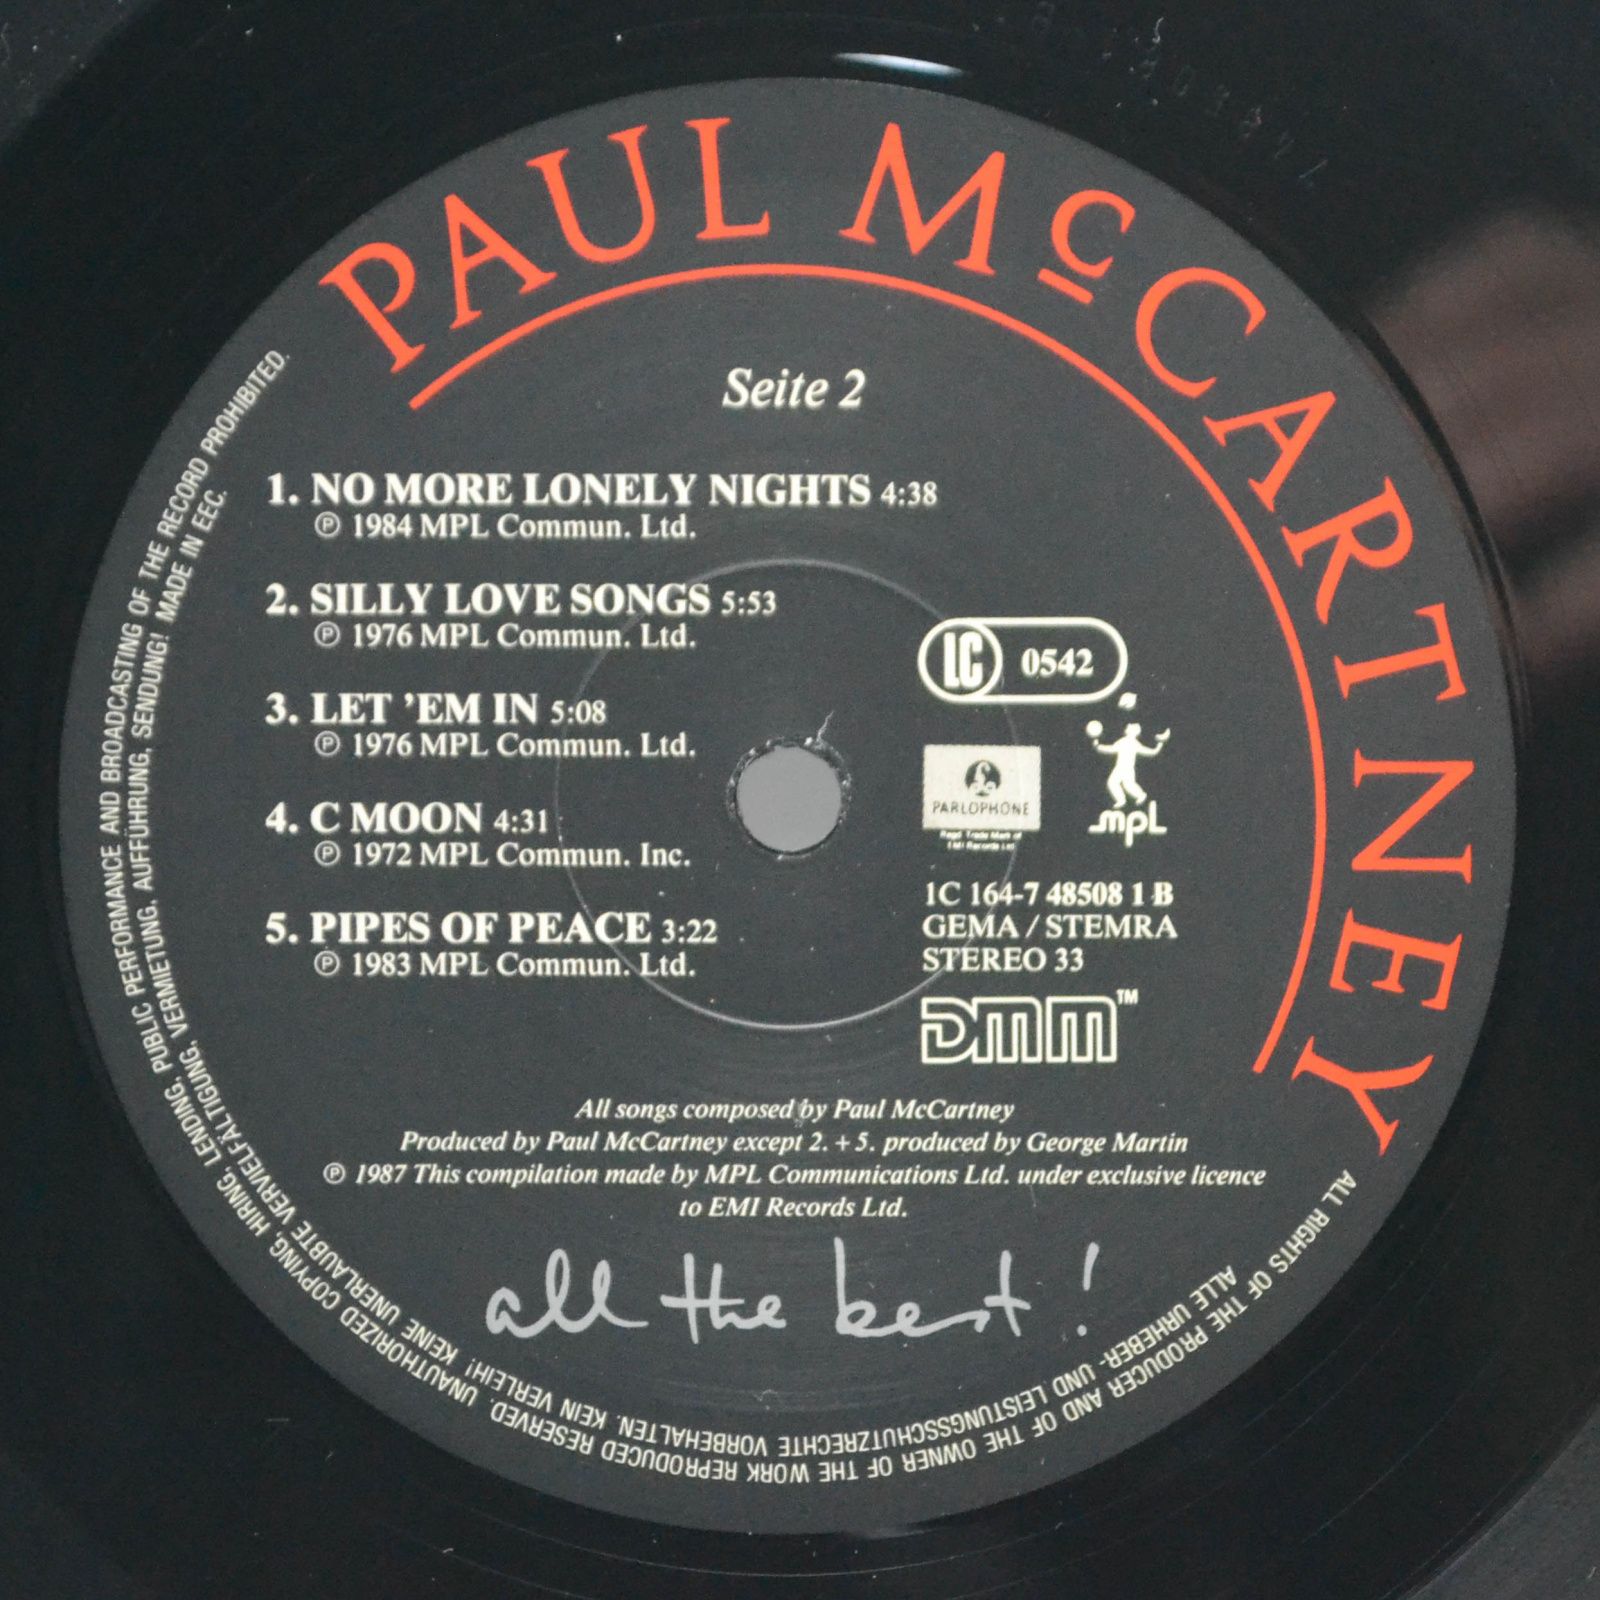 Paul McCartney — All The Best ! (2LP), 1987